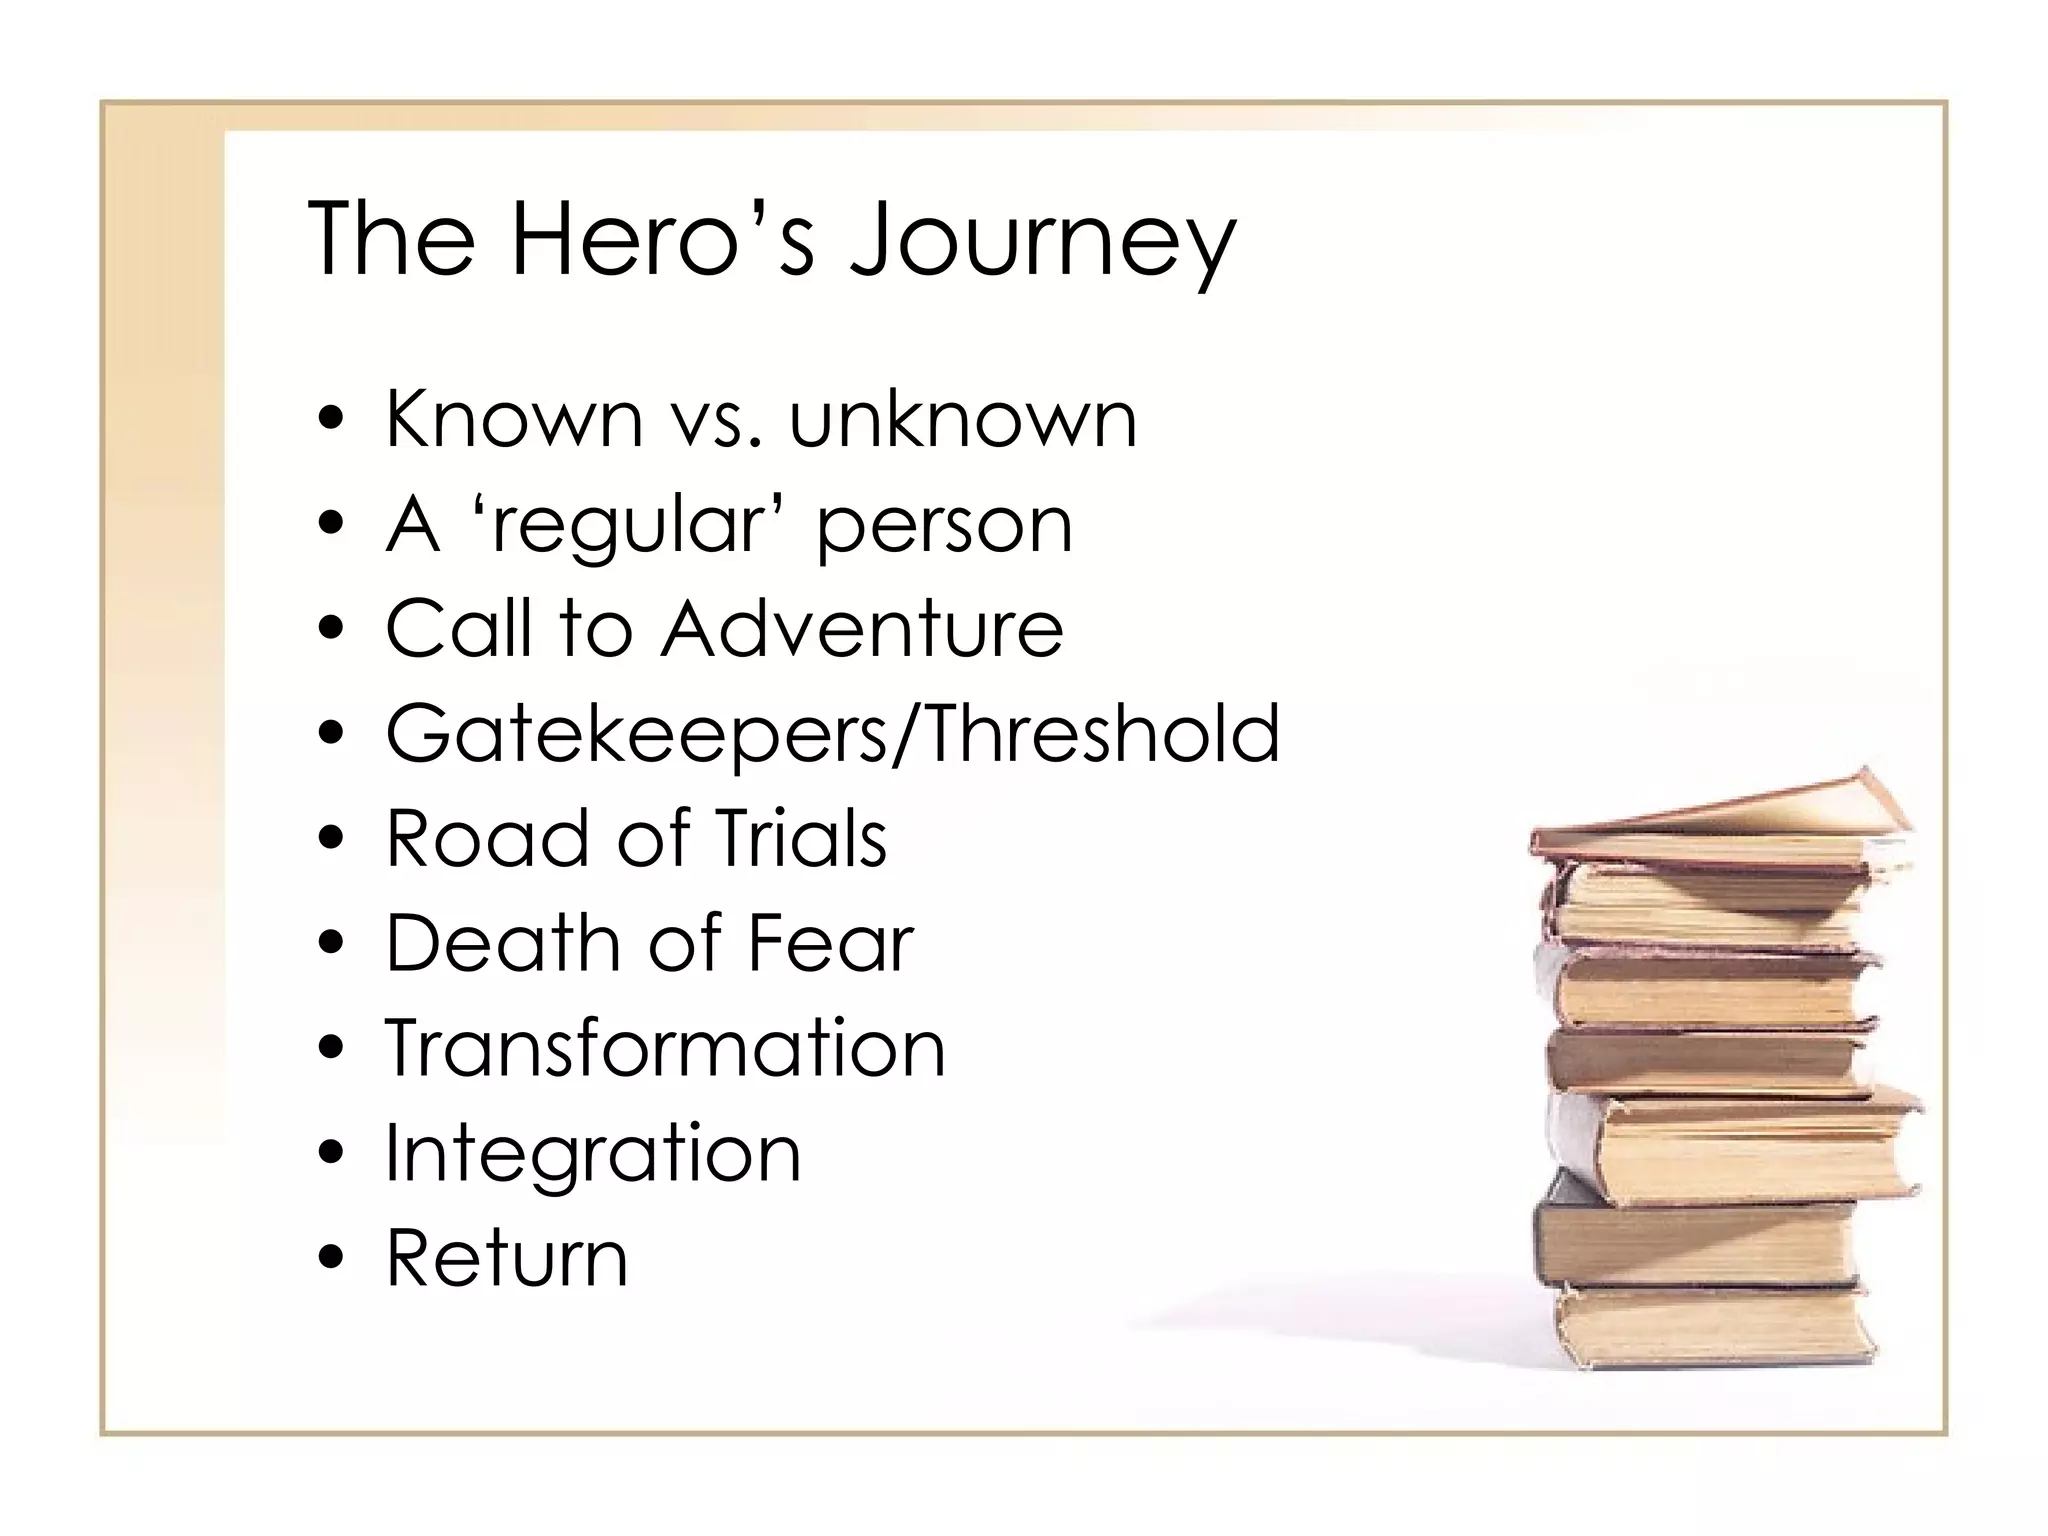 the hero's journey using shrek as an example